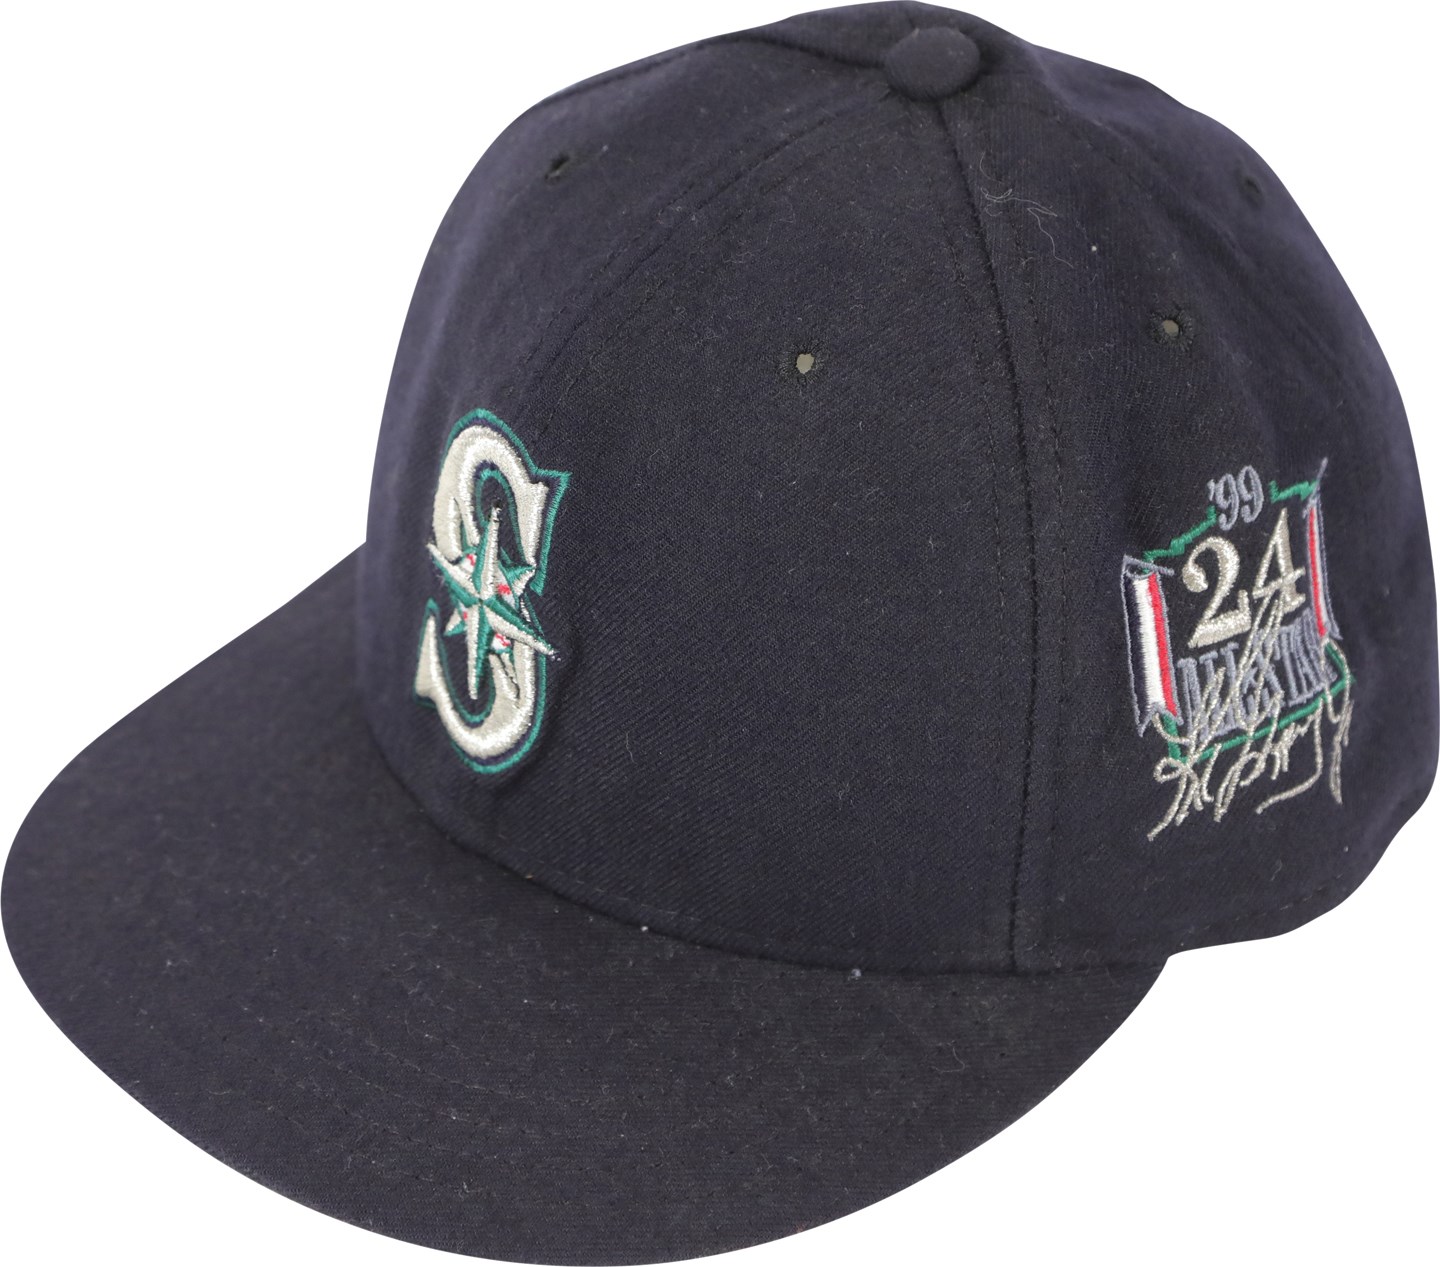 - 1999 Ken Griffey Jr. Home Run Derby Victory & All Star Game Worn Hat (Photo-Matched)